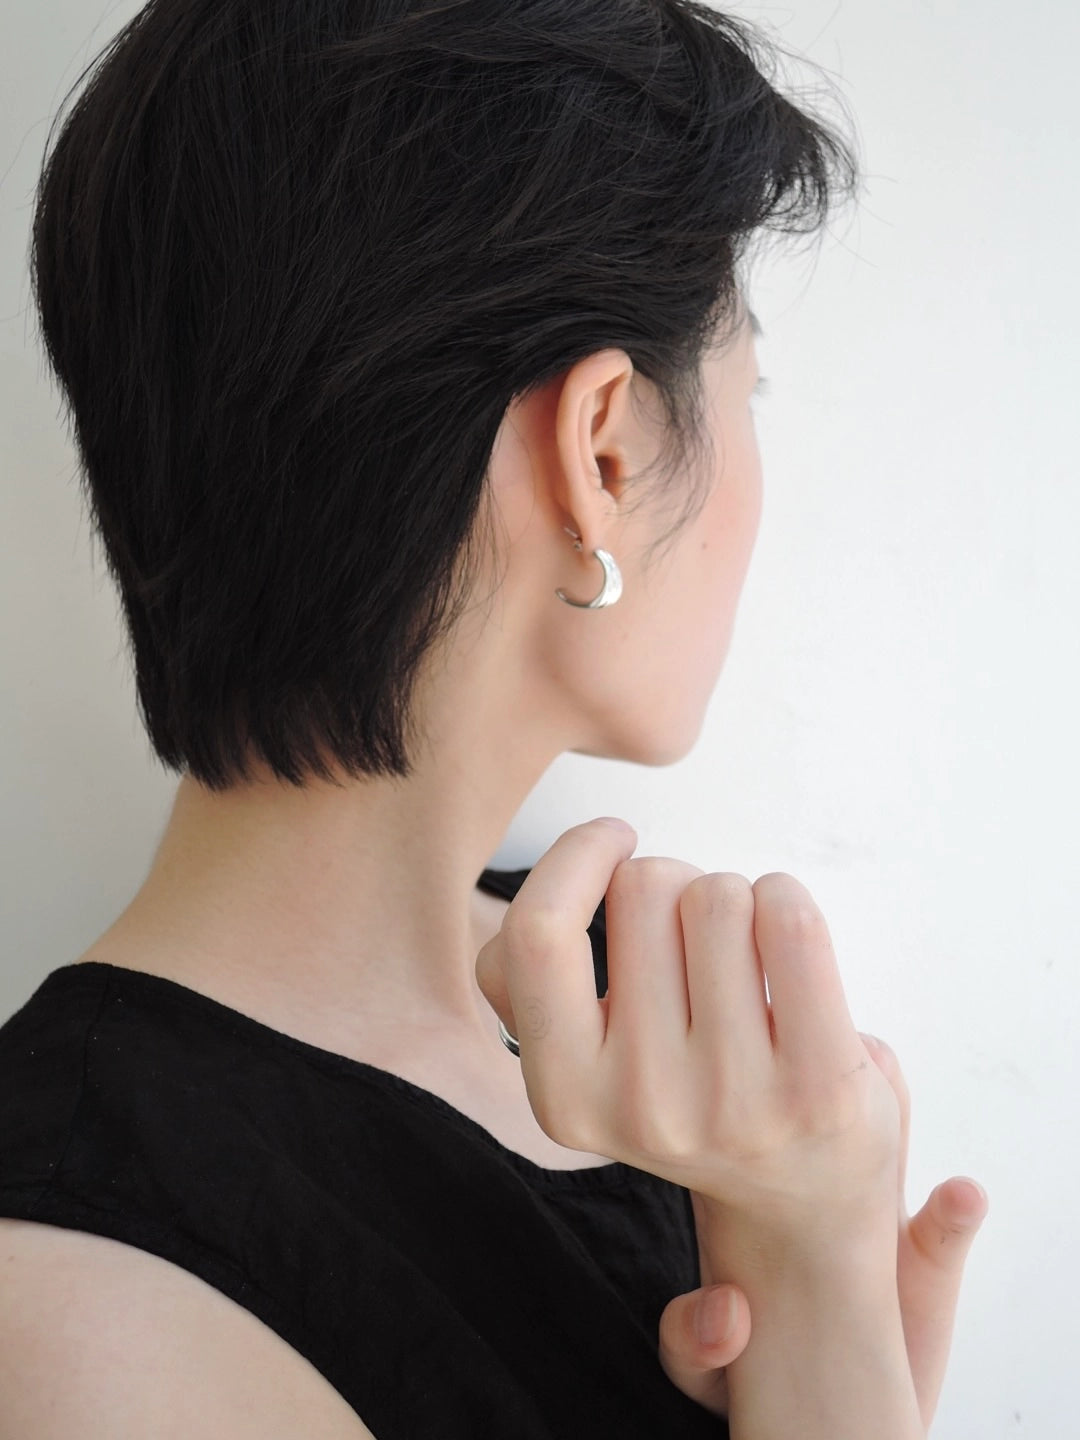 Small Bourrée Earring